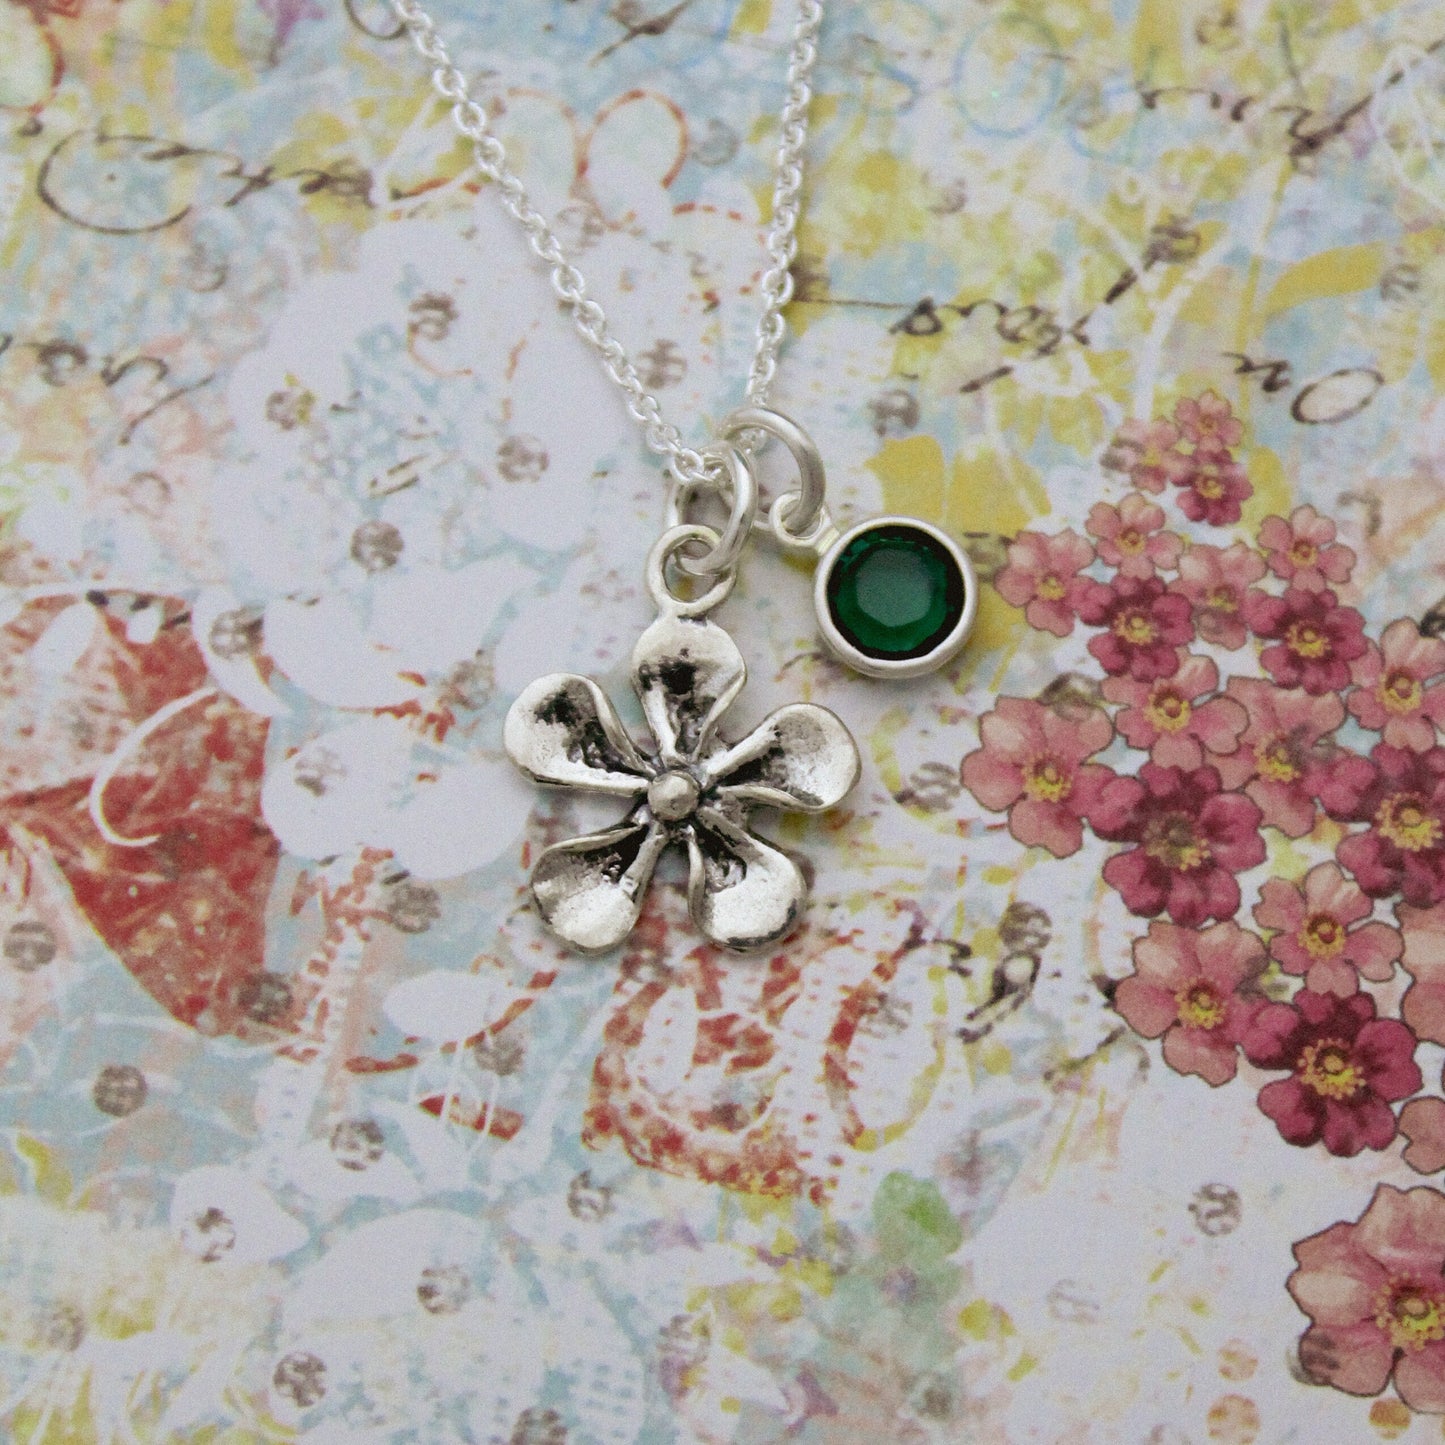 Flower Plumeria Necklace in Sterling Silver with Birthstone, Birthstone Birthday Gift, Personalized Gift, Garden Silver May Birthstone Gift